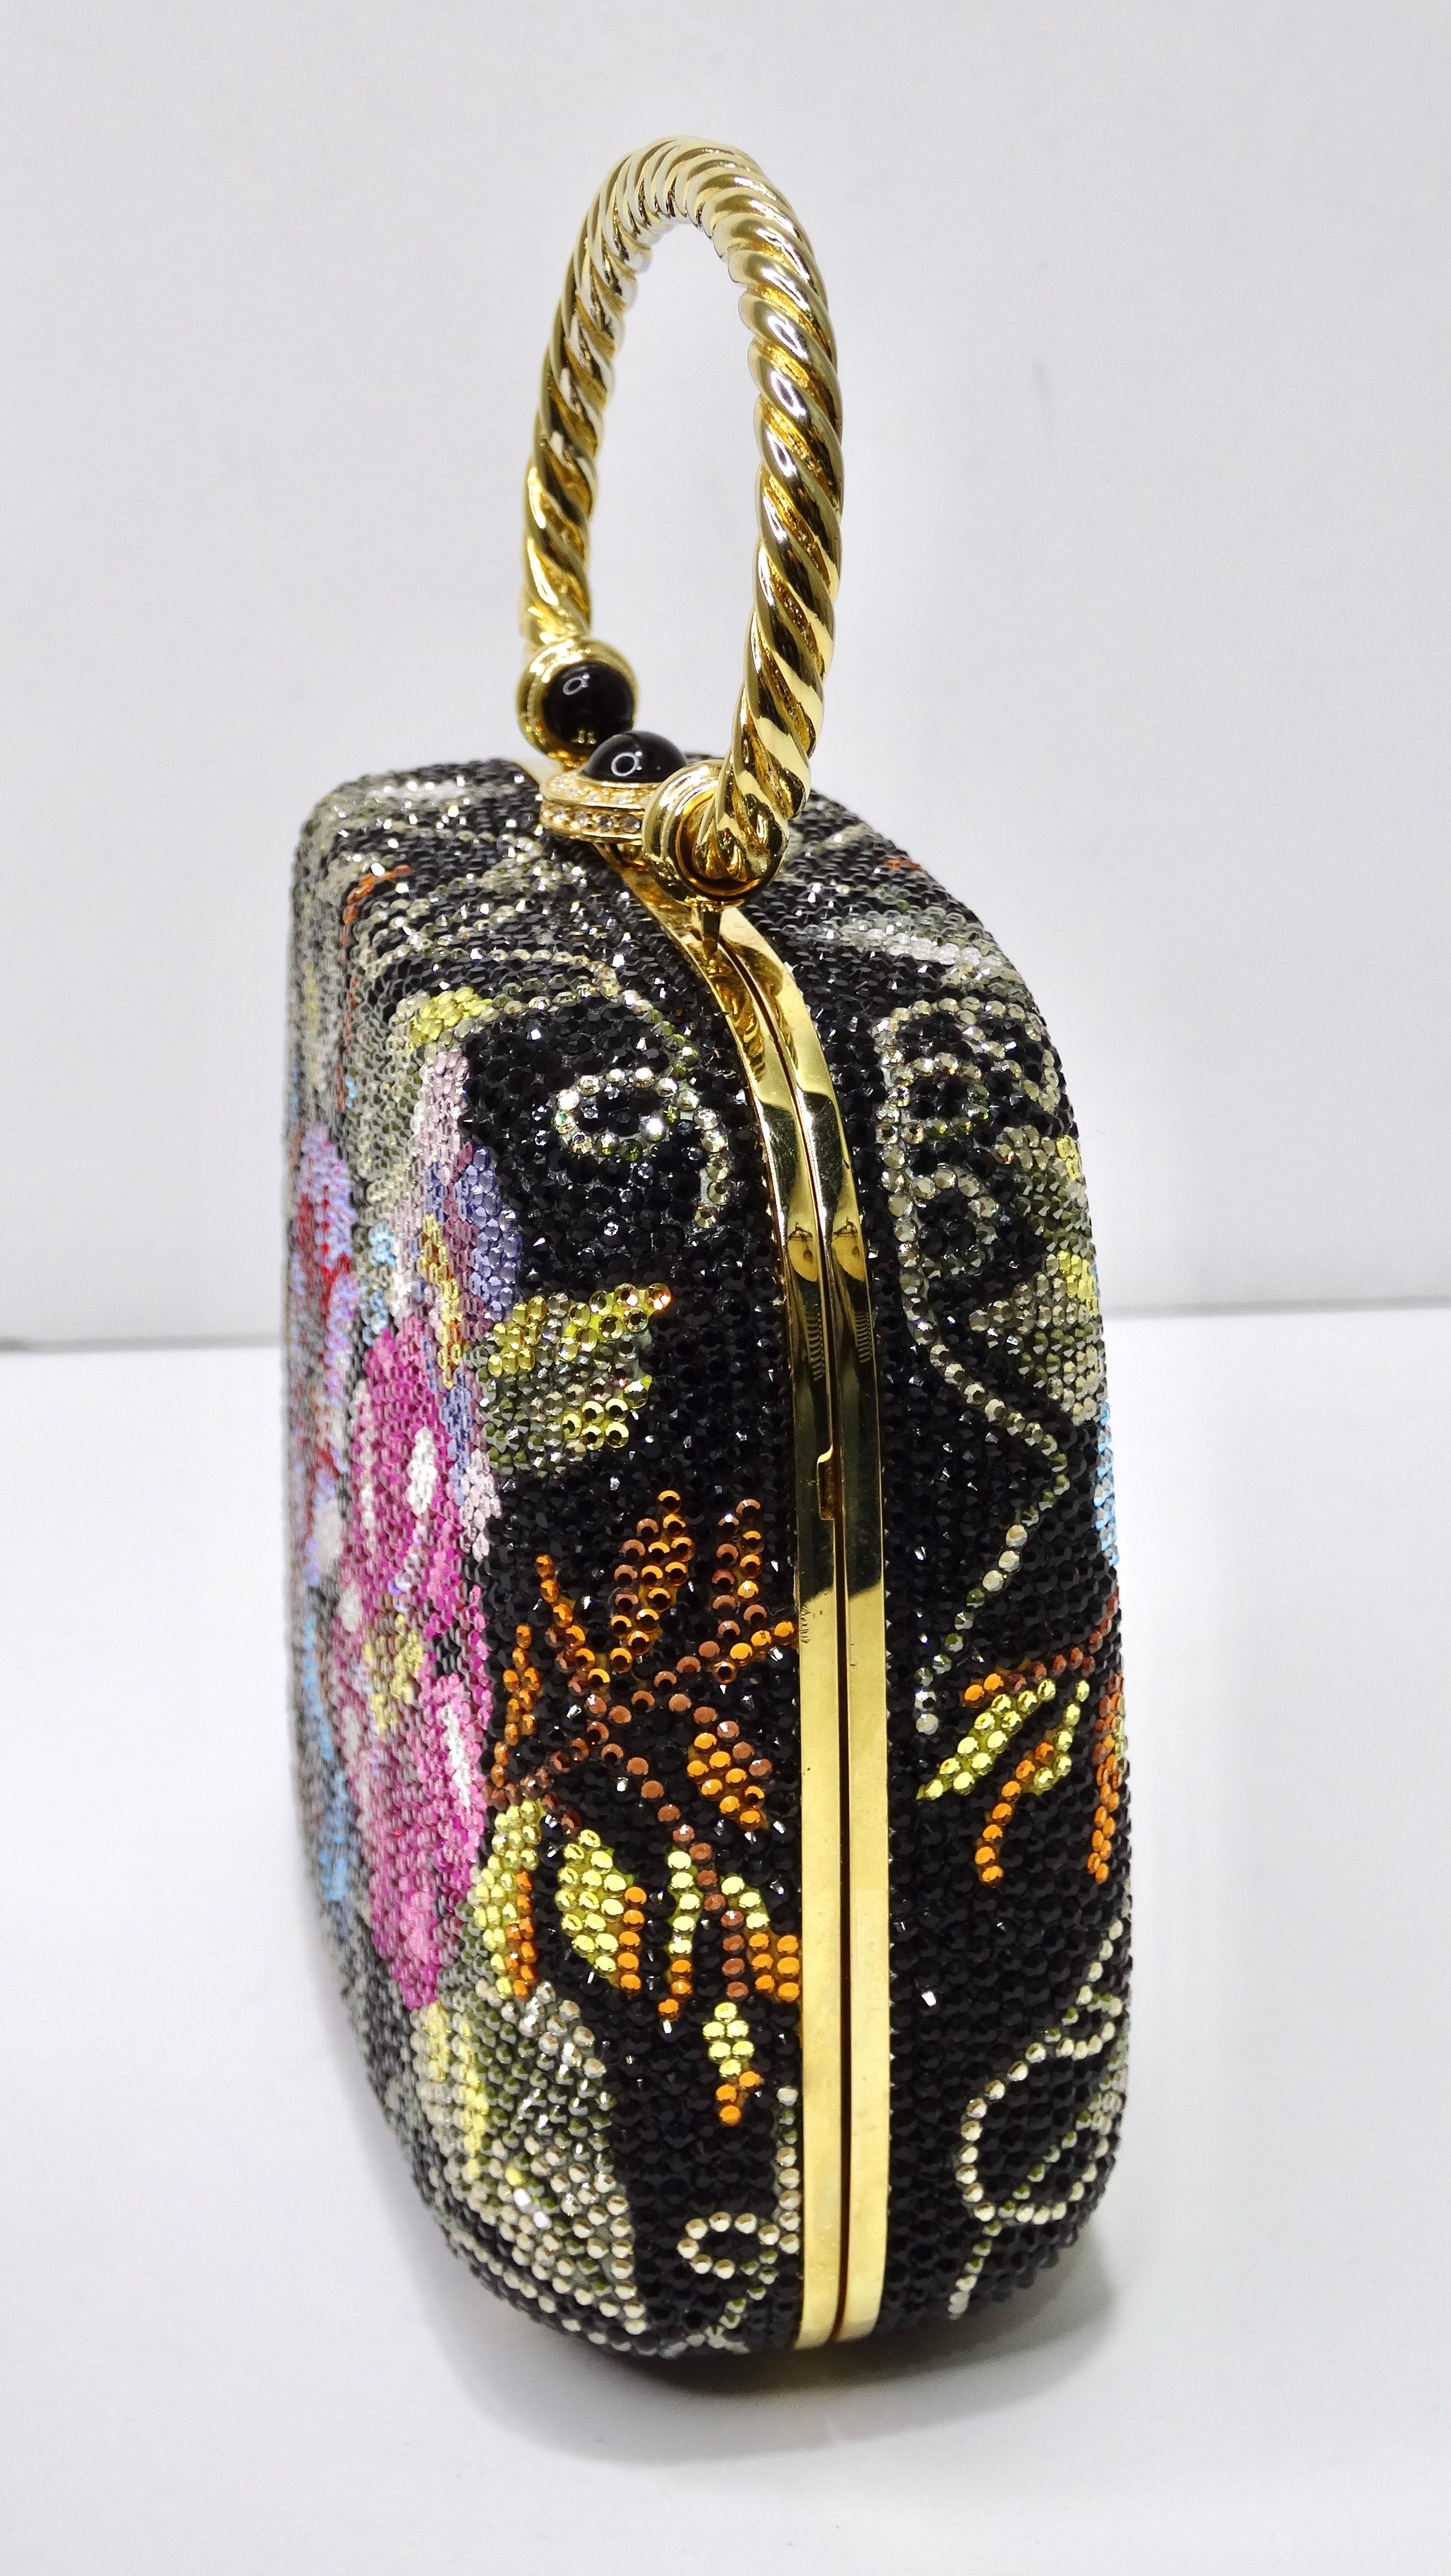 Judith Leiber Swarovski Crystal Flower Motif Evening Bag In Excellent Condition For Sale In Scottsdale, AZ